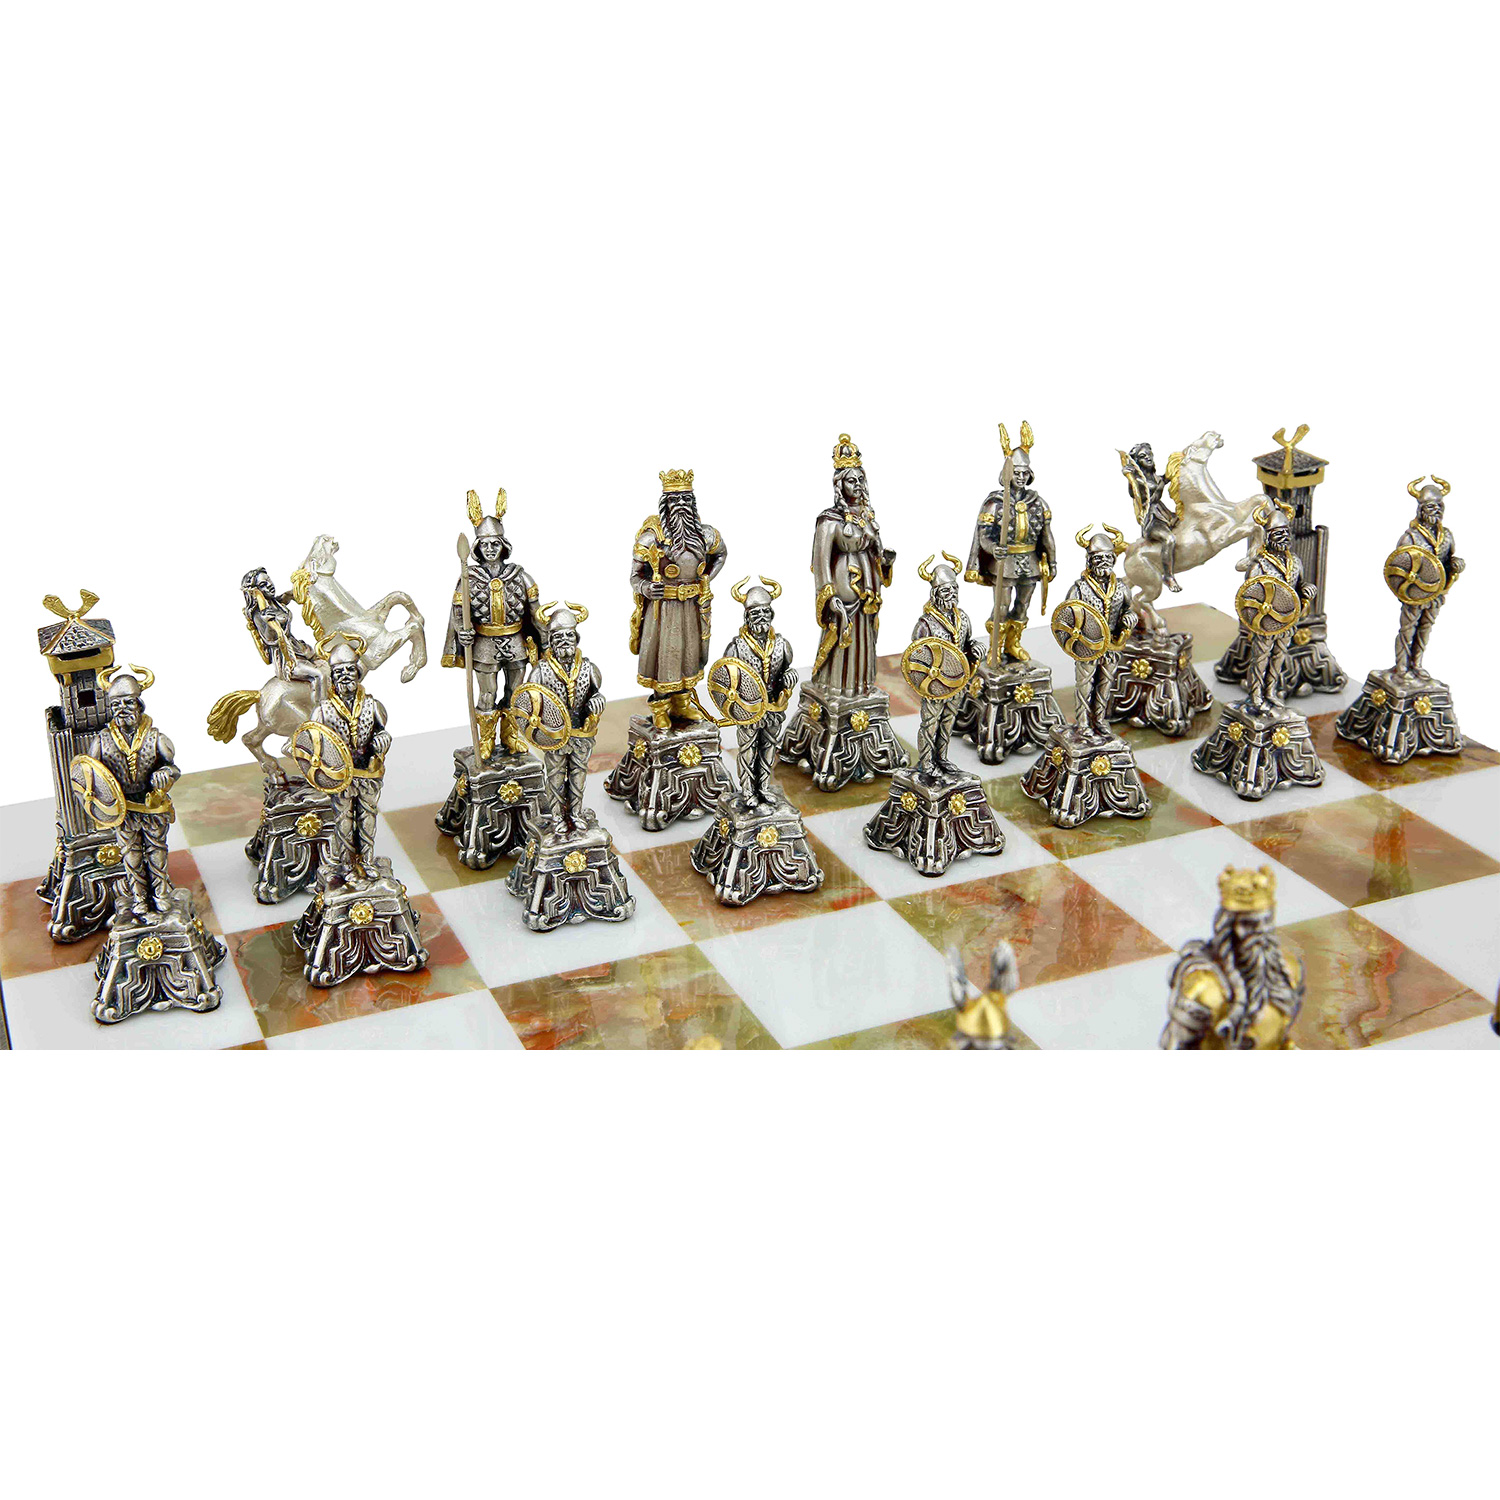 Luxury Metal Chess Set Chrome Plated Roman Chess Pieces Gold Set